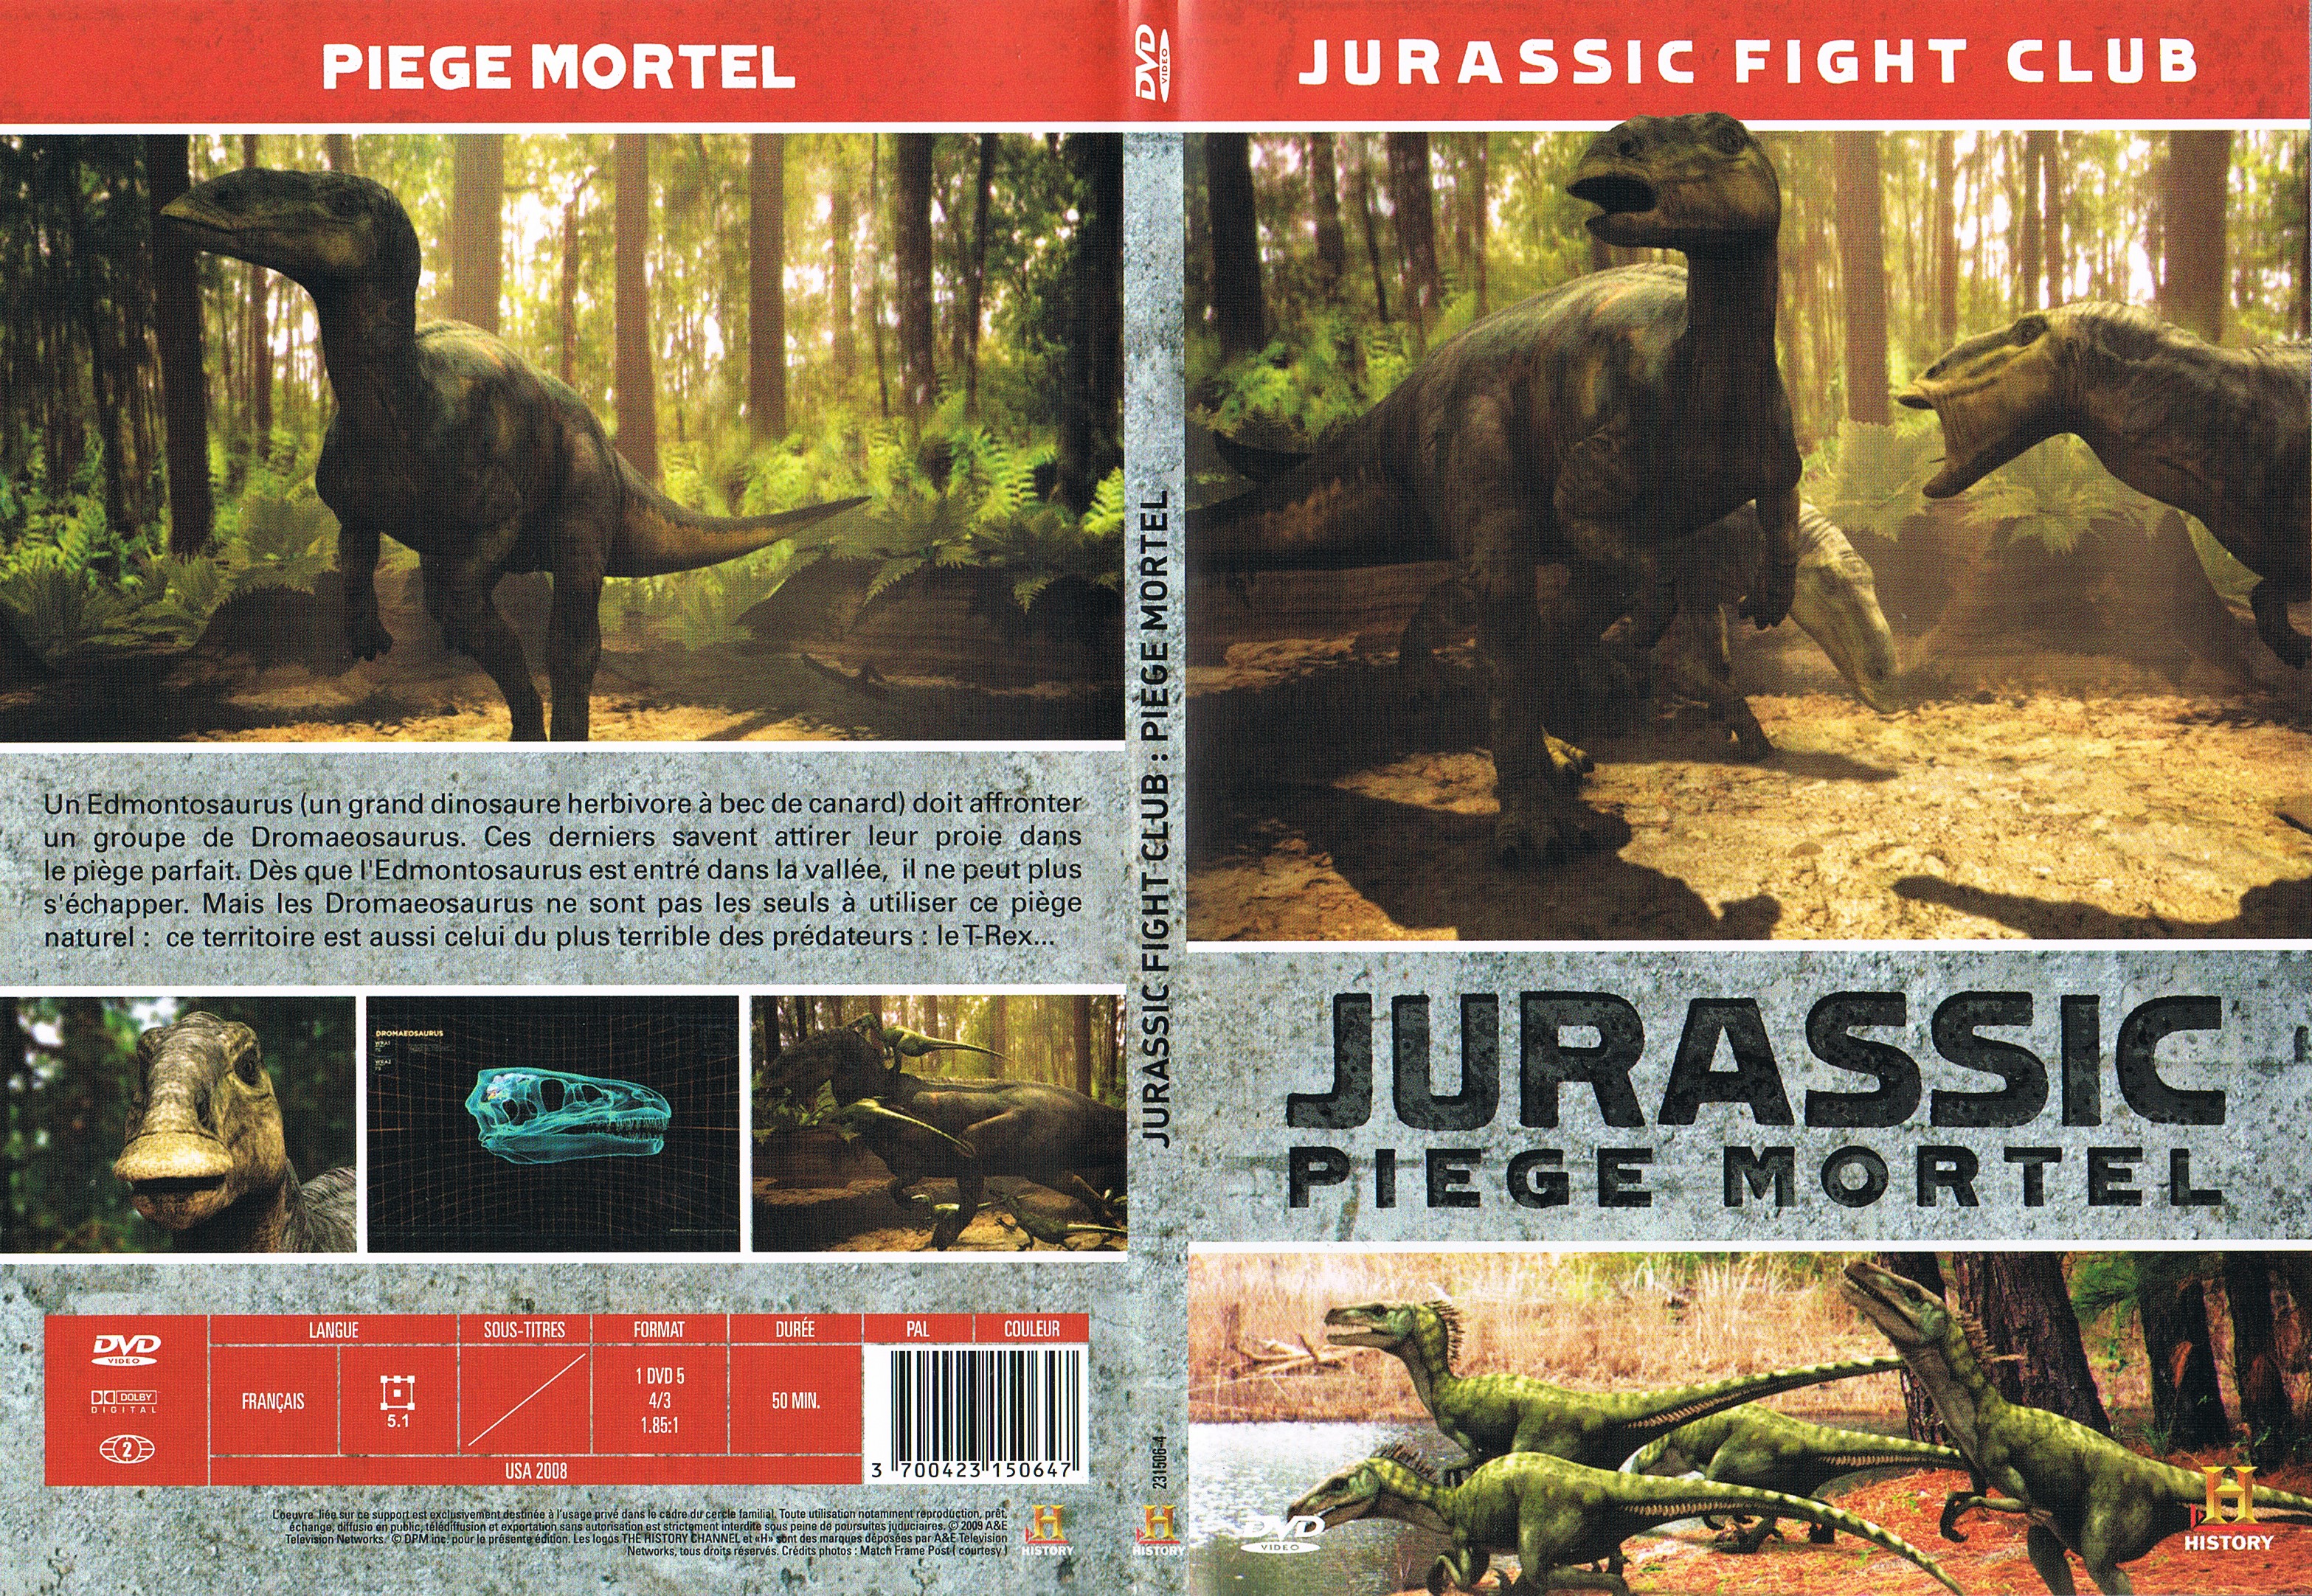 Jaquette DVD Jurassic Fight Club - Piege Mortel